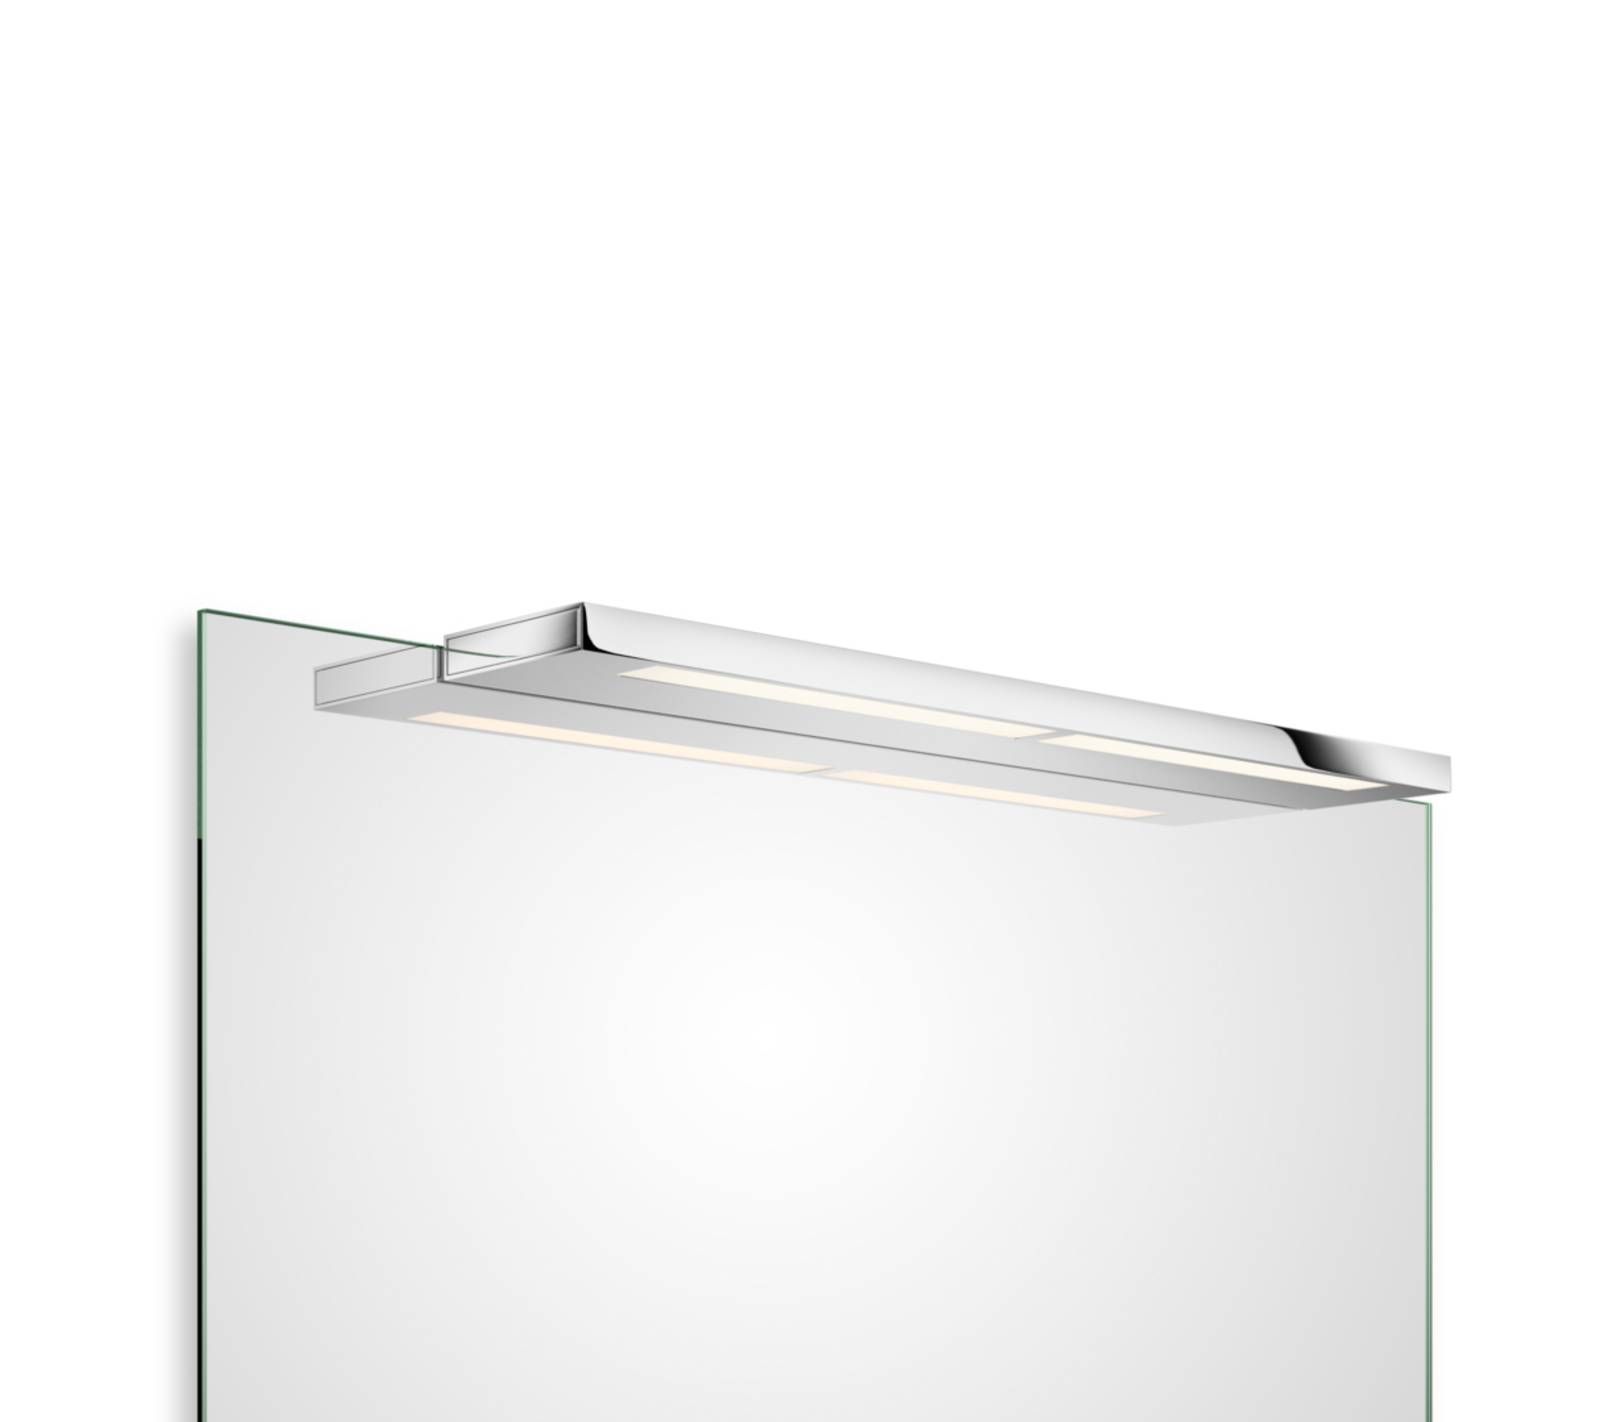 Decor Walther Slim zrkadlové LED chróm 60 cm, Kúpeľňa, mosadz, sklo, 32.8W, L: 60 cm, K: 2cm